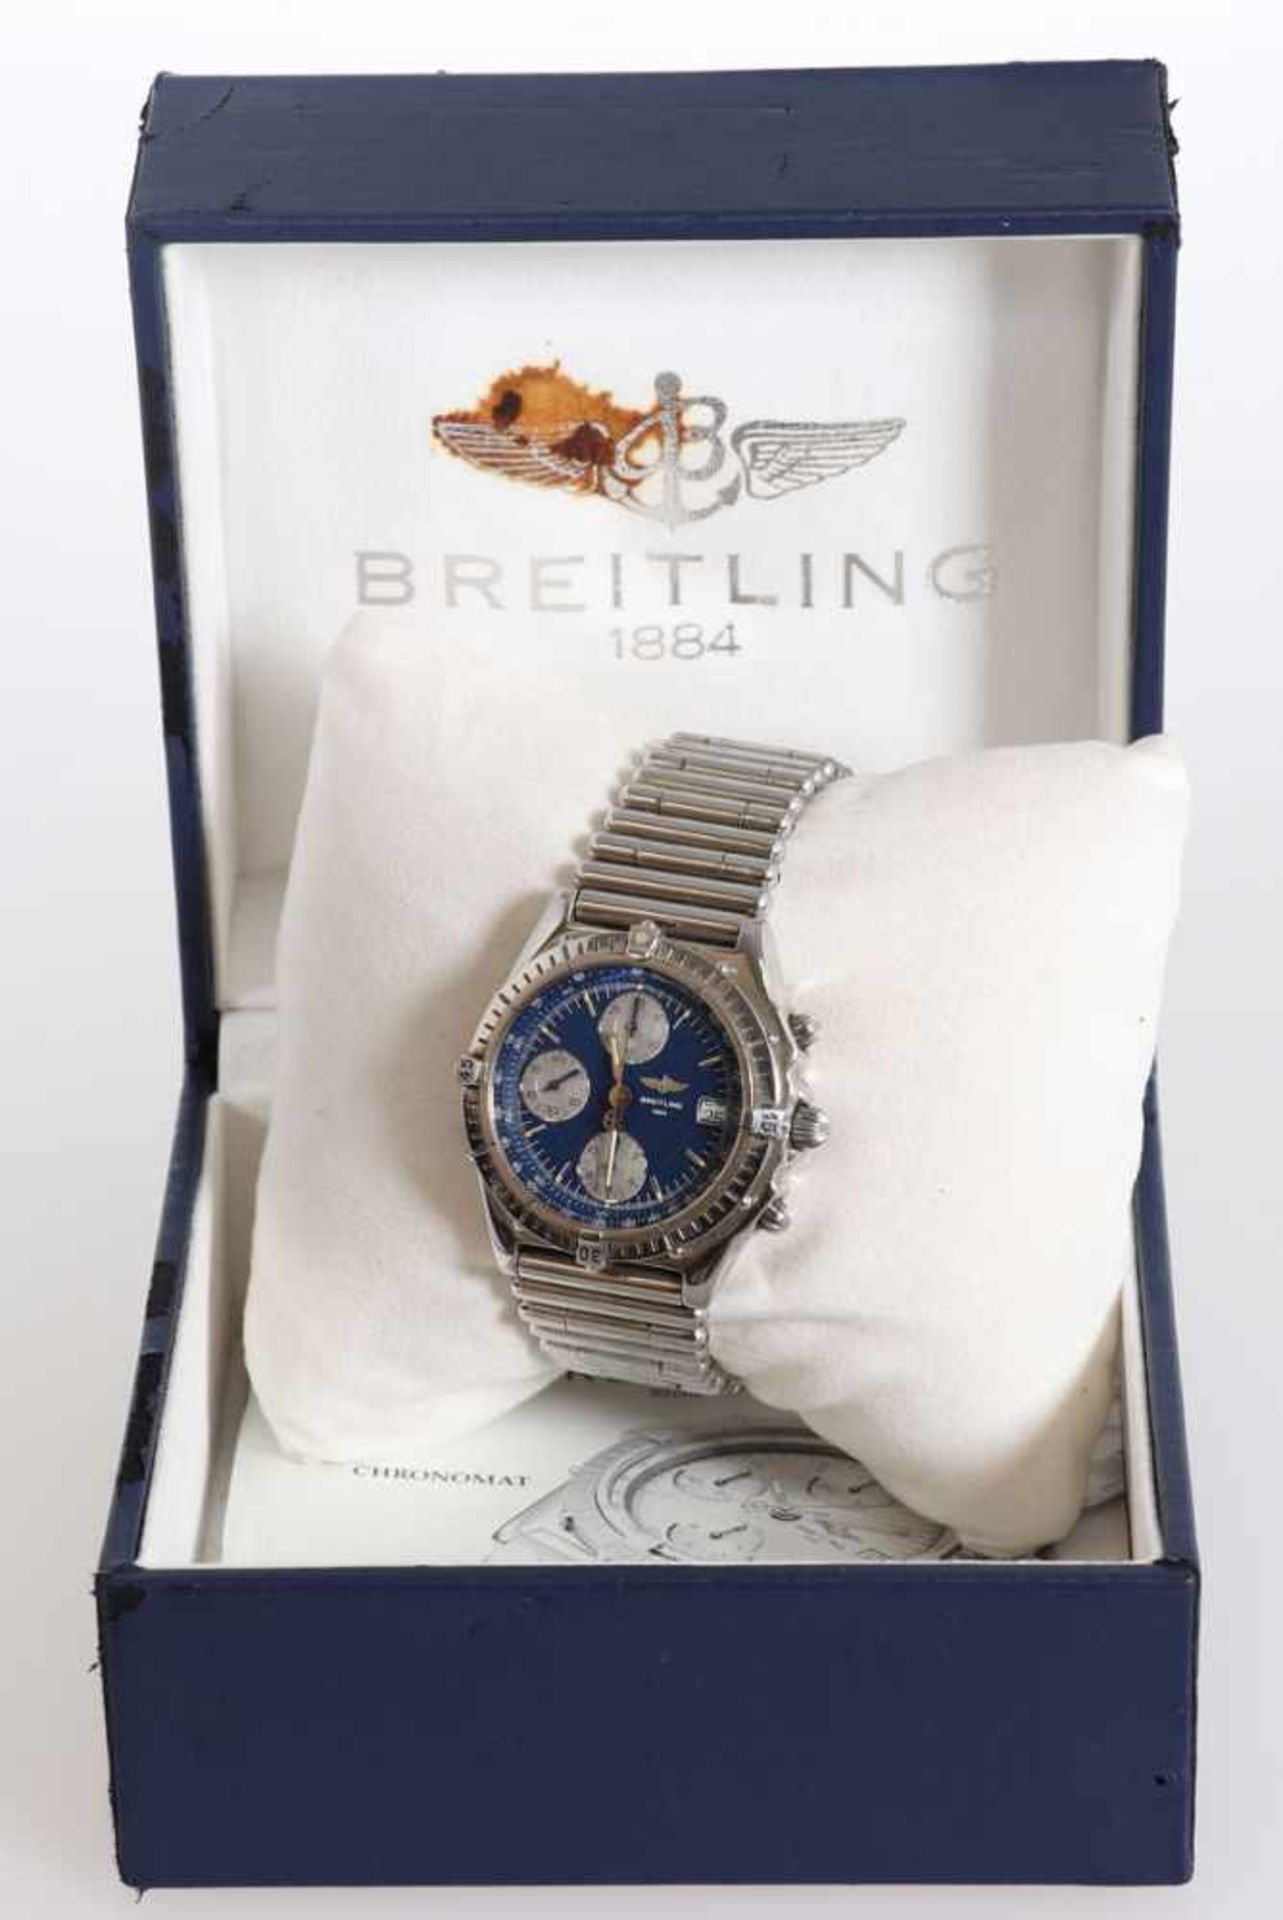 Breitling-ChronographFa. Breitling, Schweiz. Modell: Breitling Chronomat. Edelstahl. Gew.: 169,2 - Bild 2 aus 2